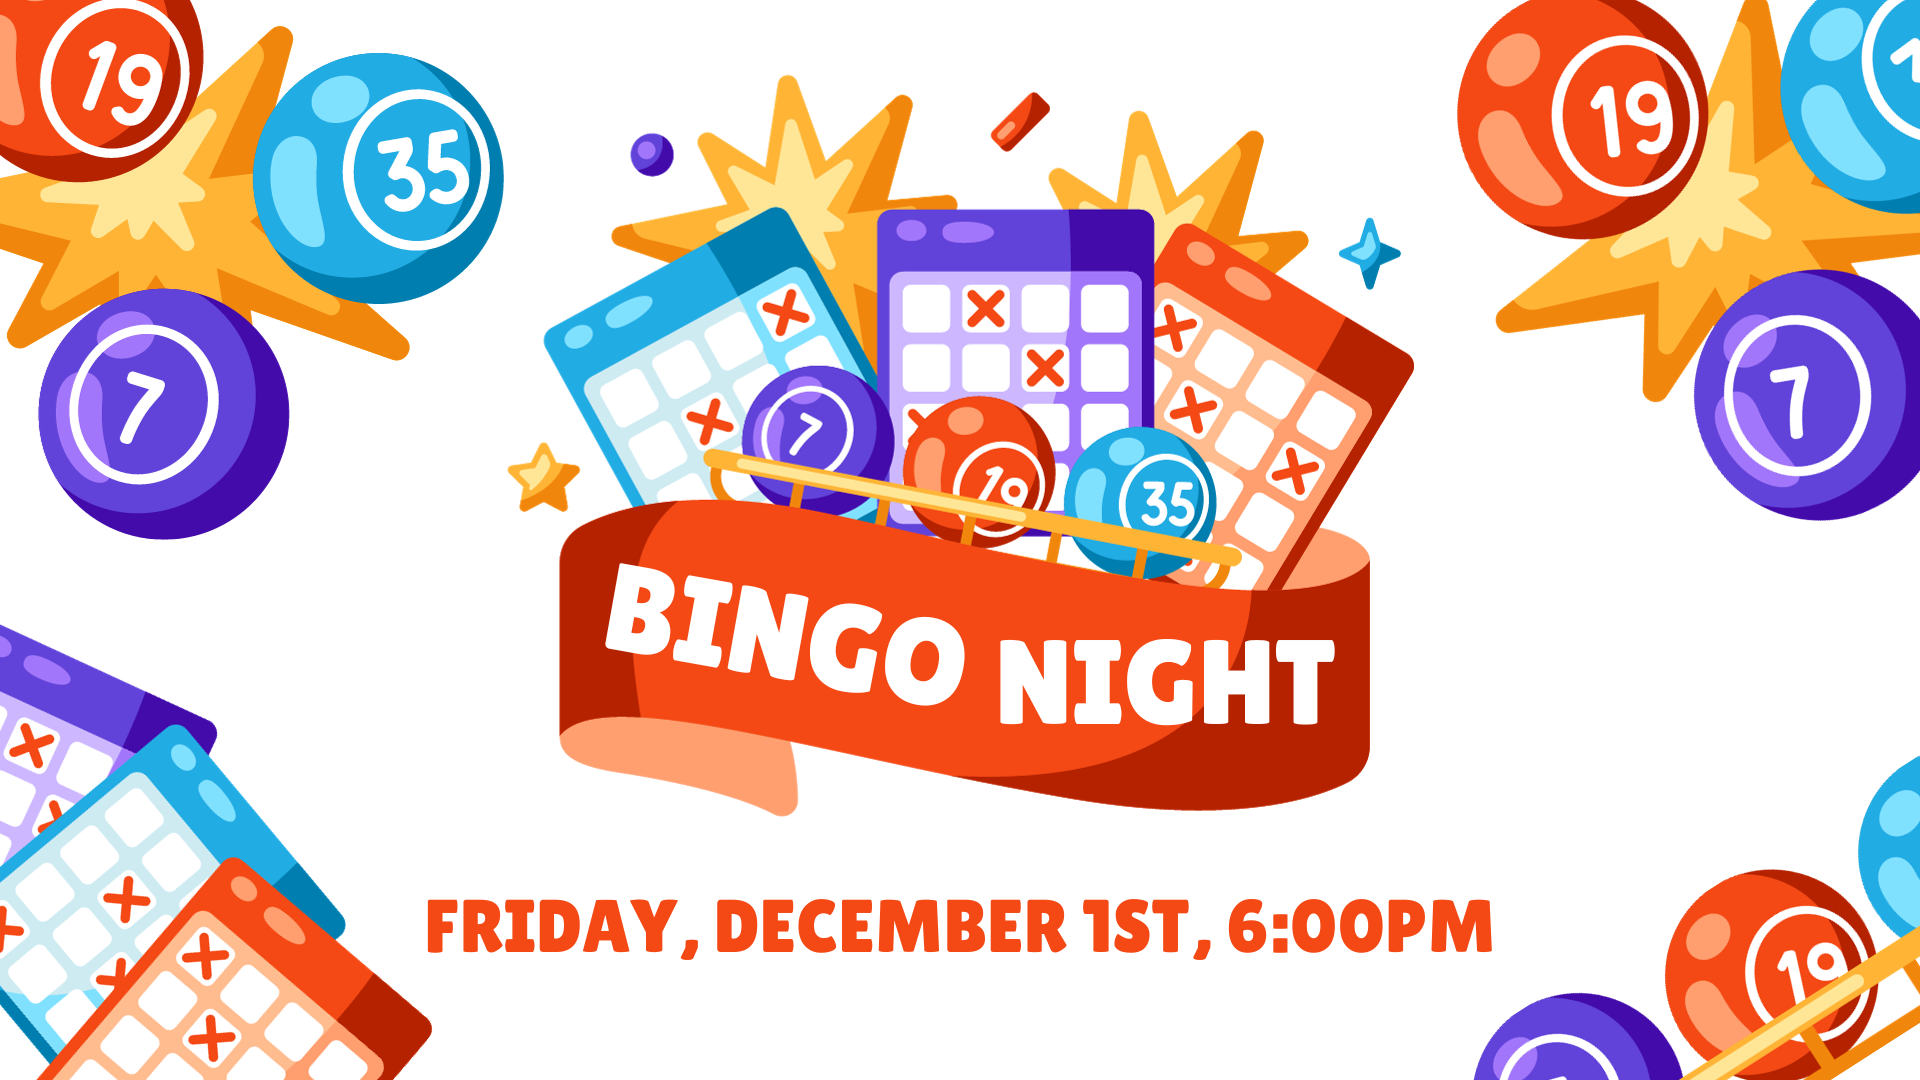 Join Us for Bingo Night on December 1st!